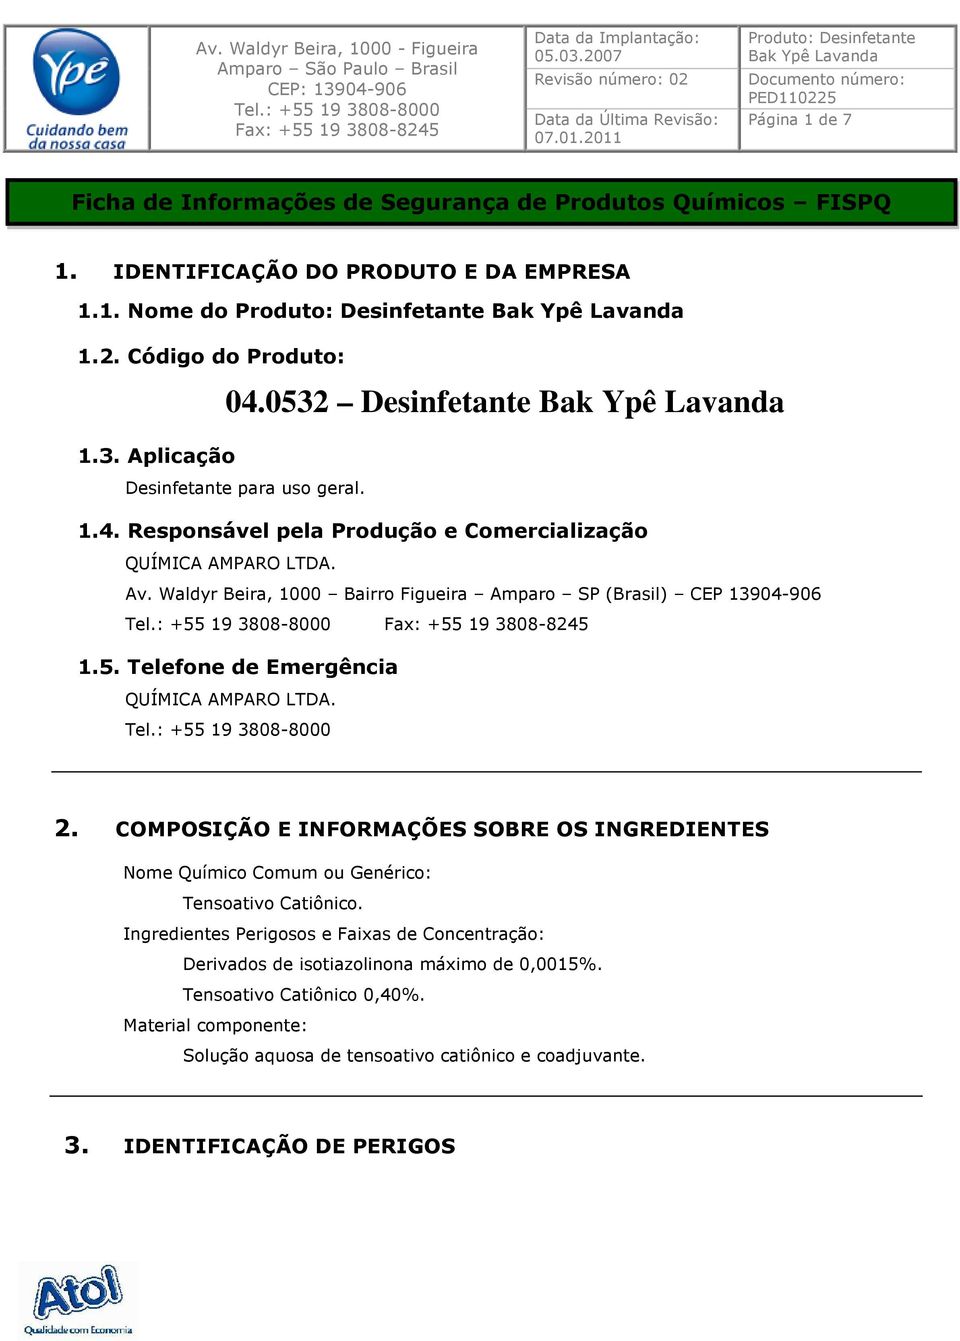 Waldyr Beira, 1000 Bairro Figueira Amparo SP (Brasil) CEP 13904-906 1.5. Telefone de Emergência QUÍMICA AMPARO LTDA. 2.